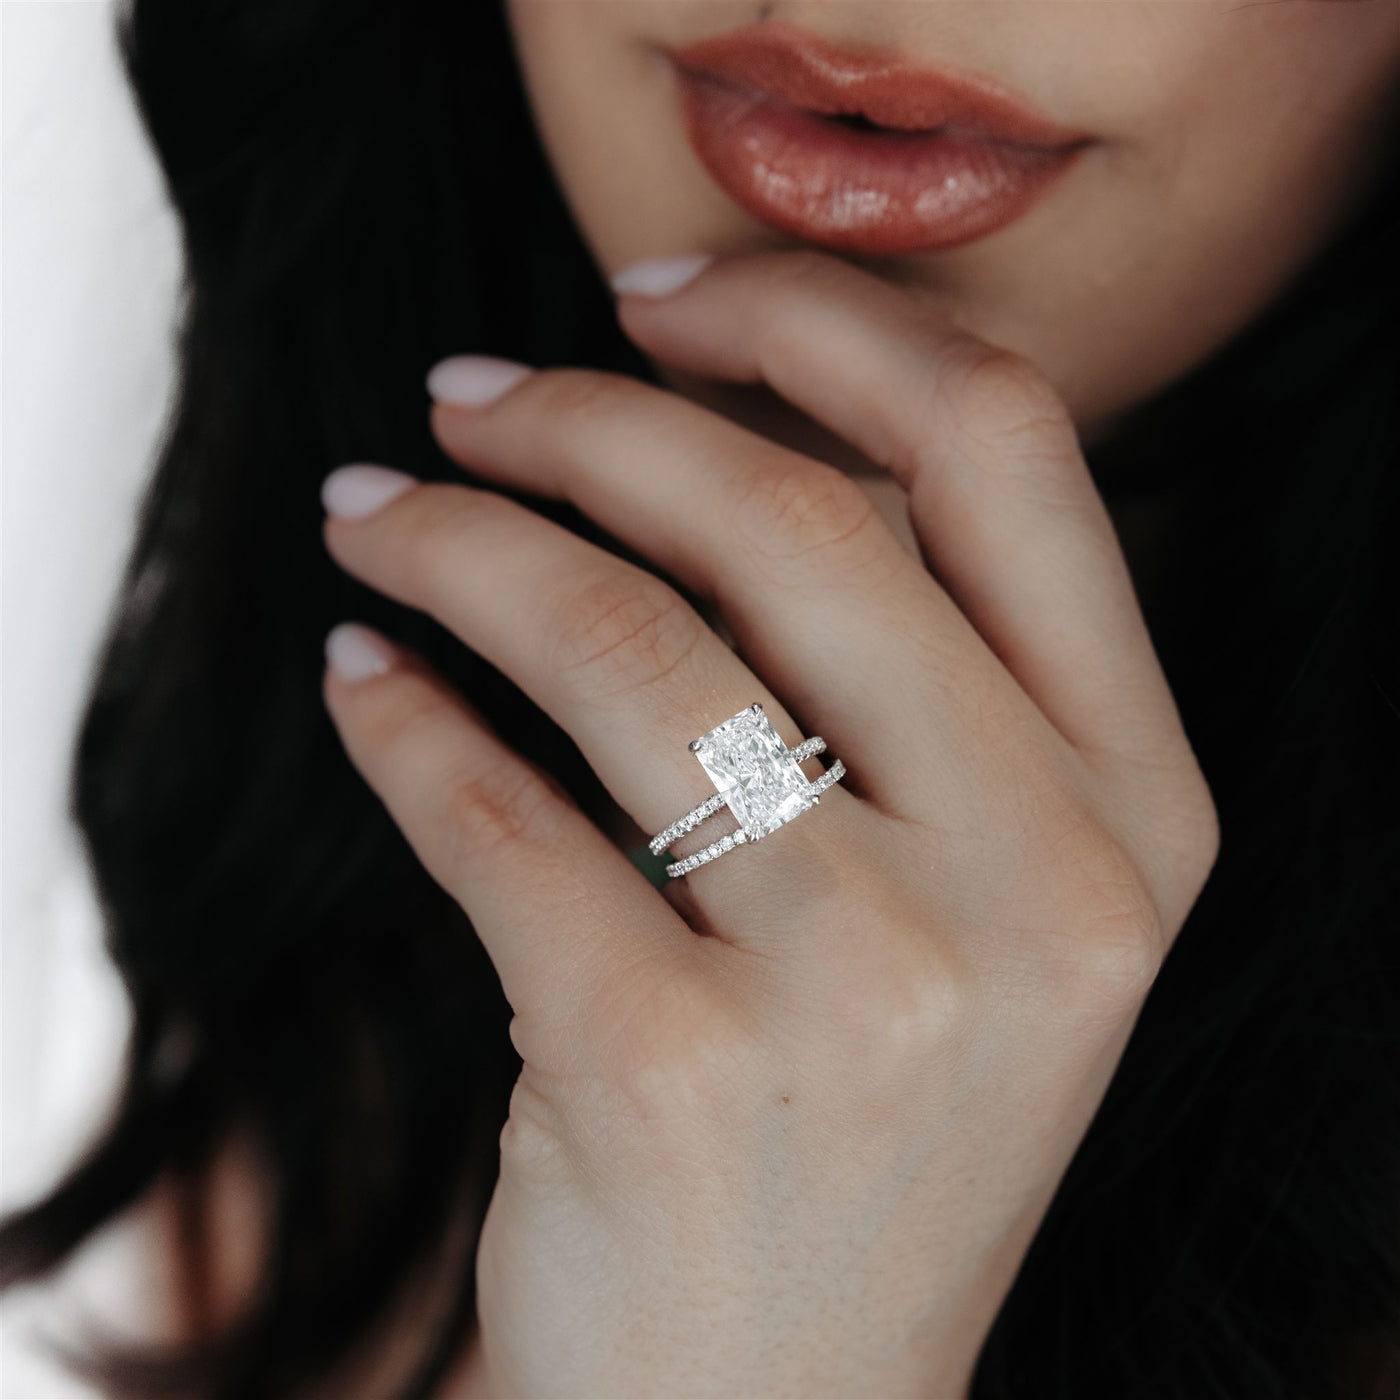 3.5 carat radiant cut diamond engagement ring